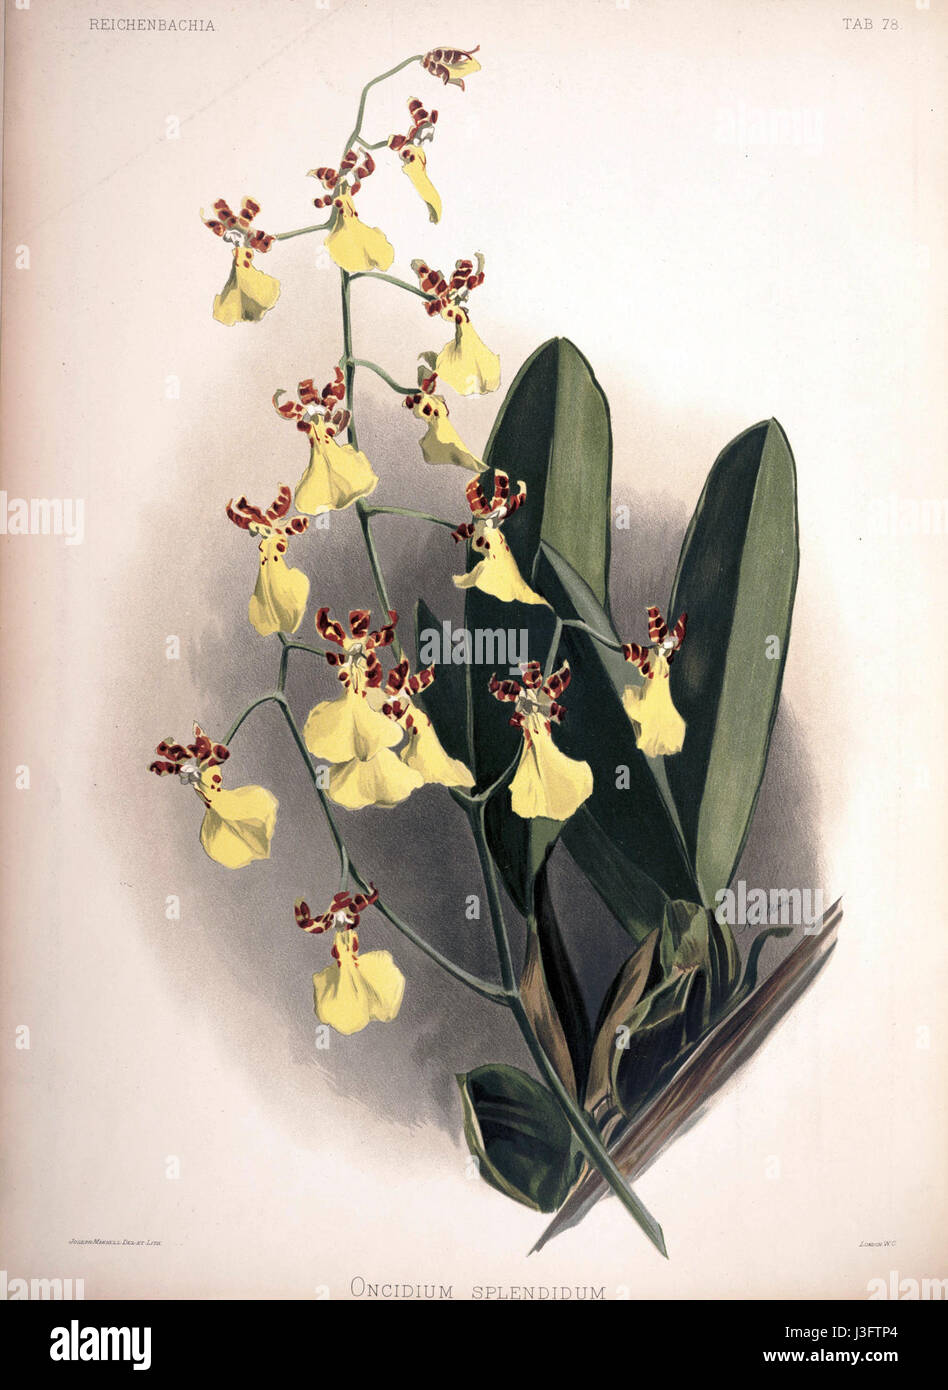 Frederick Sander   Reichenbachia II plate 78 (1890)   Oncidium splendidum Stock Photo